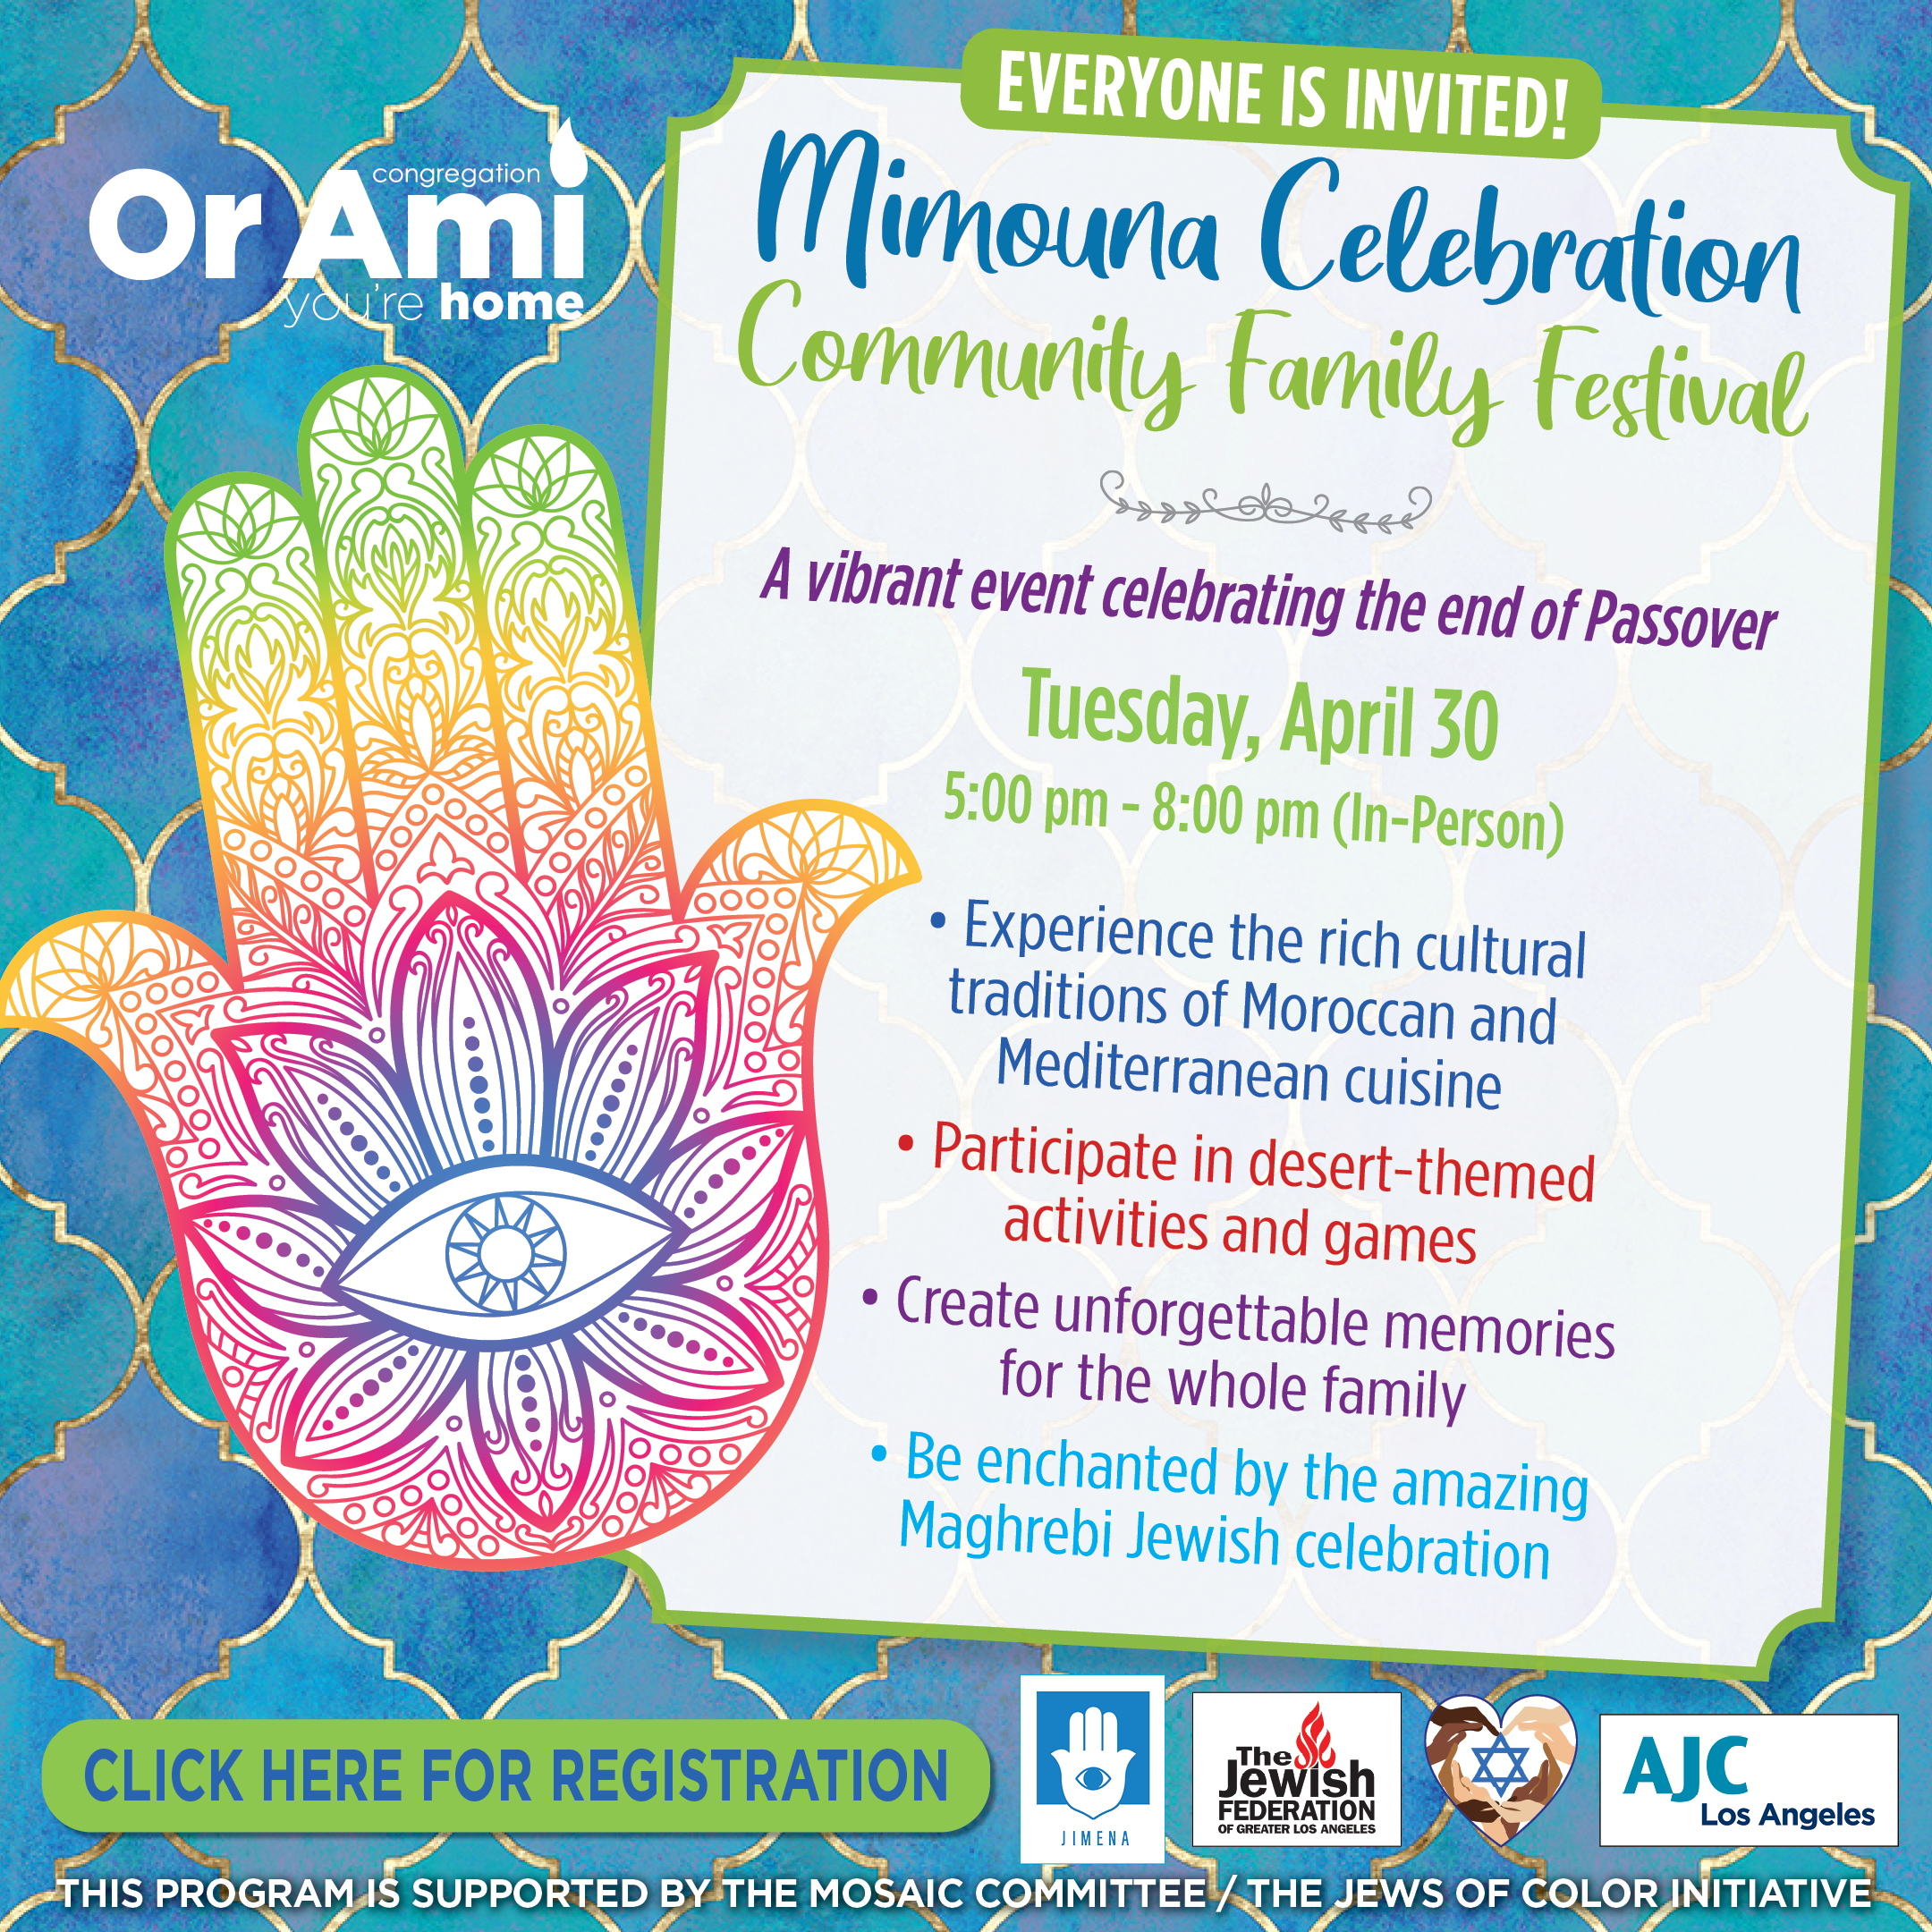 *2COA - Mimouna Celebration Community Family Festival CLICK